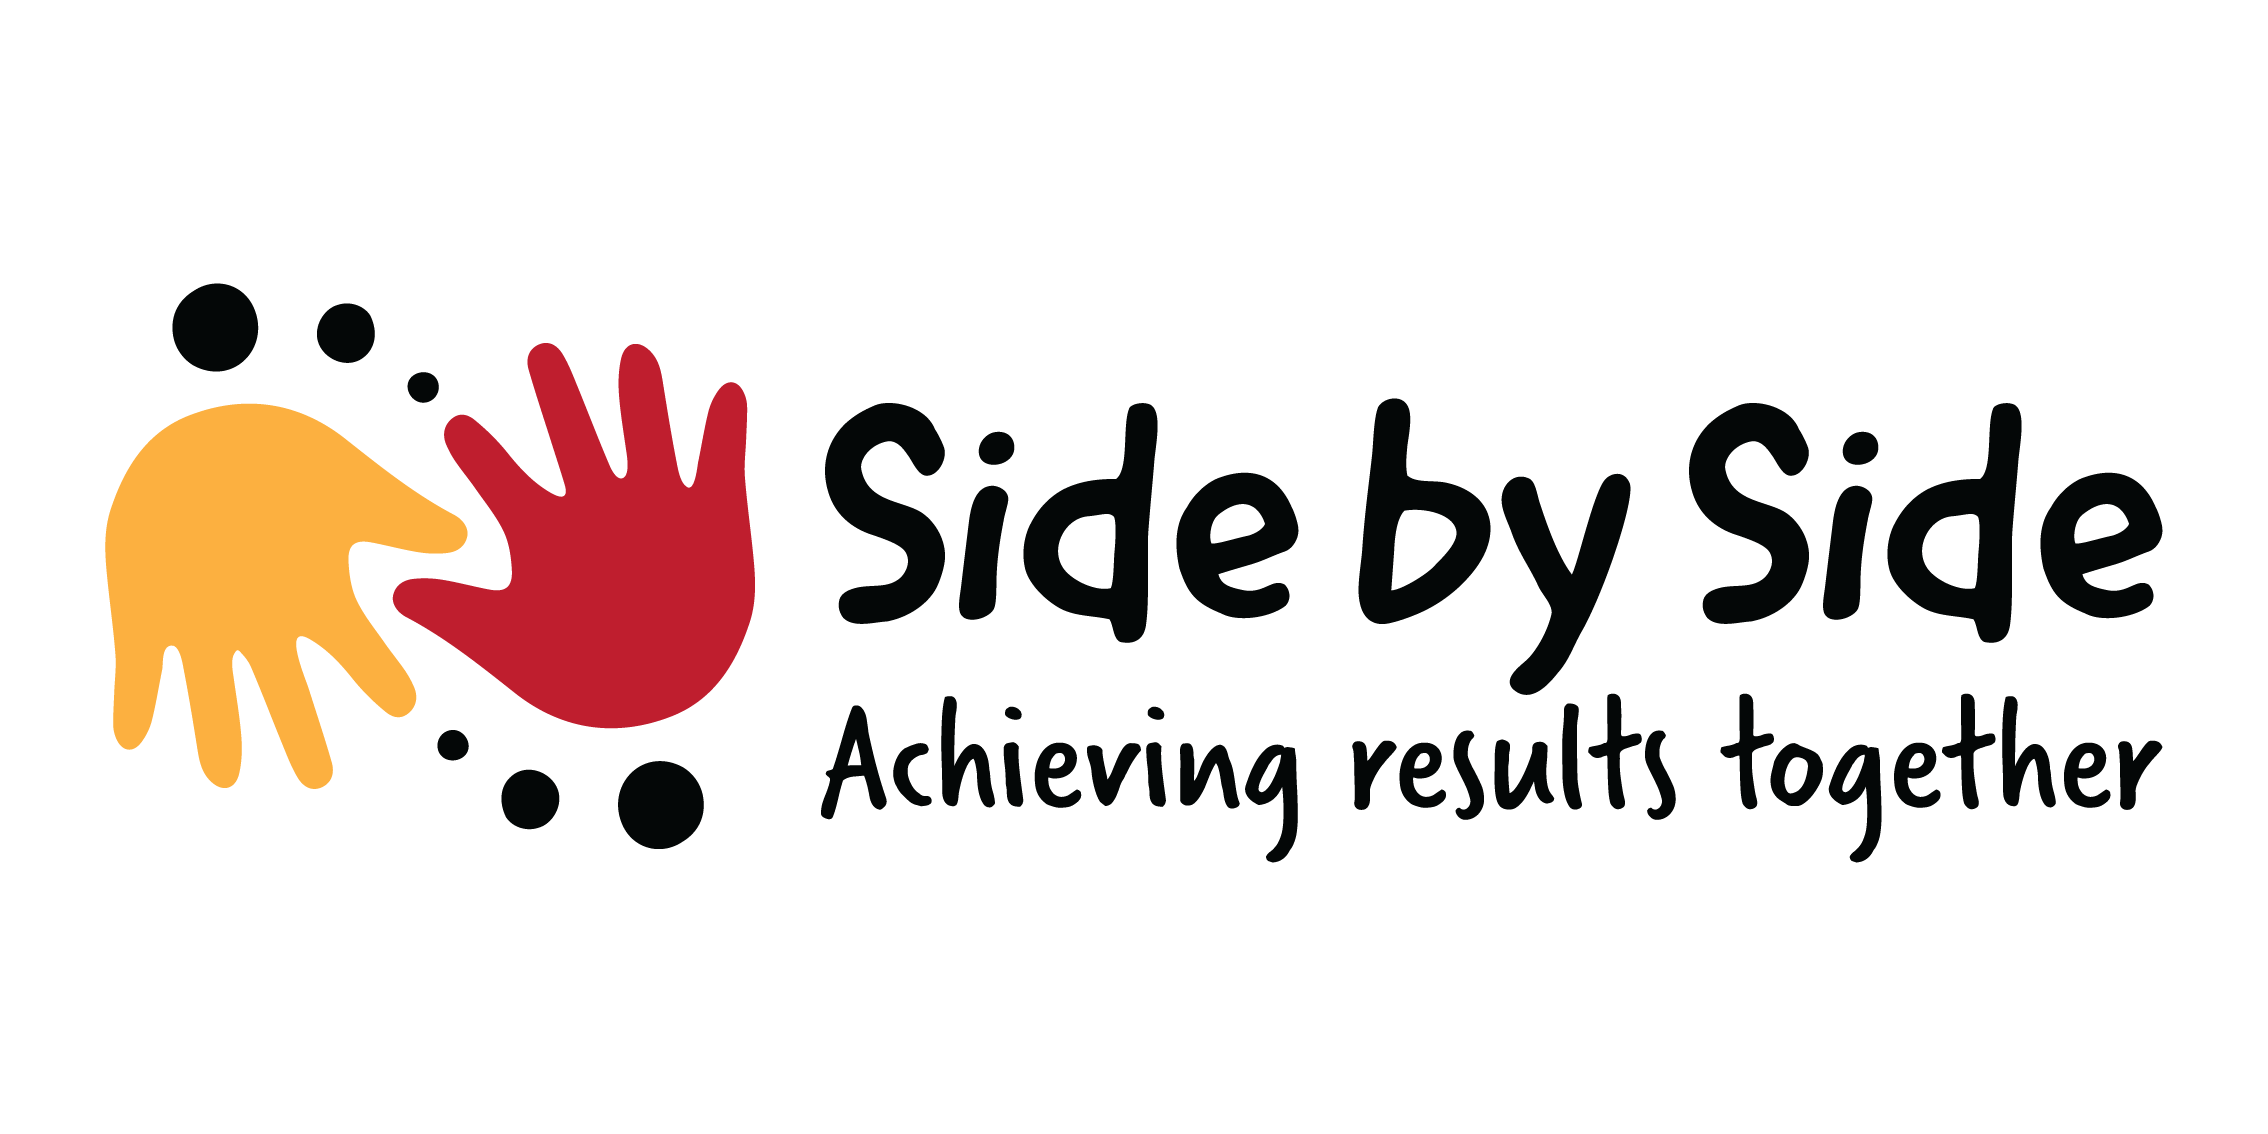 Side by Side – Social Impact Bond